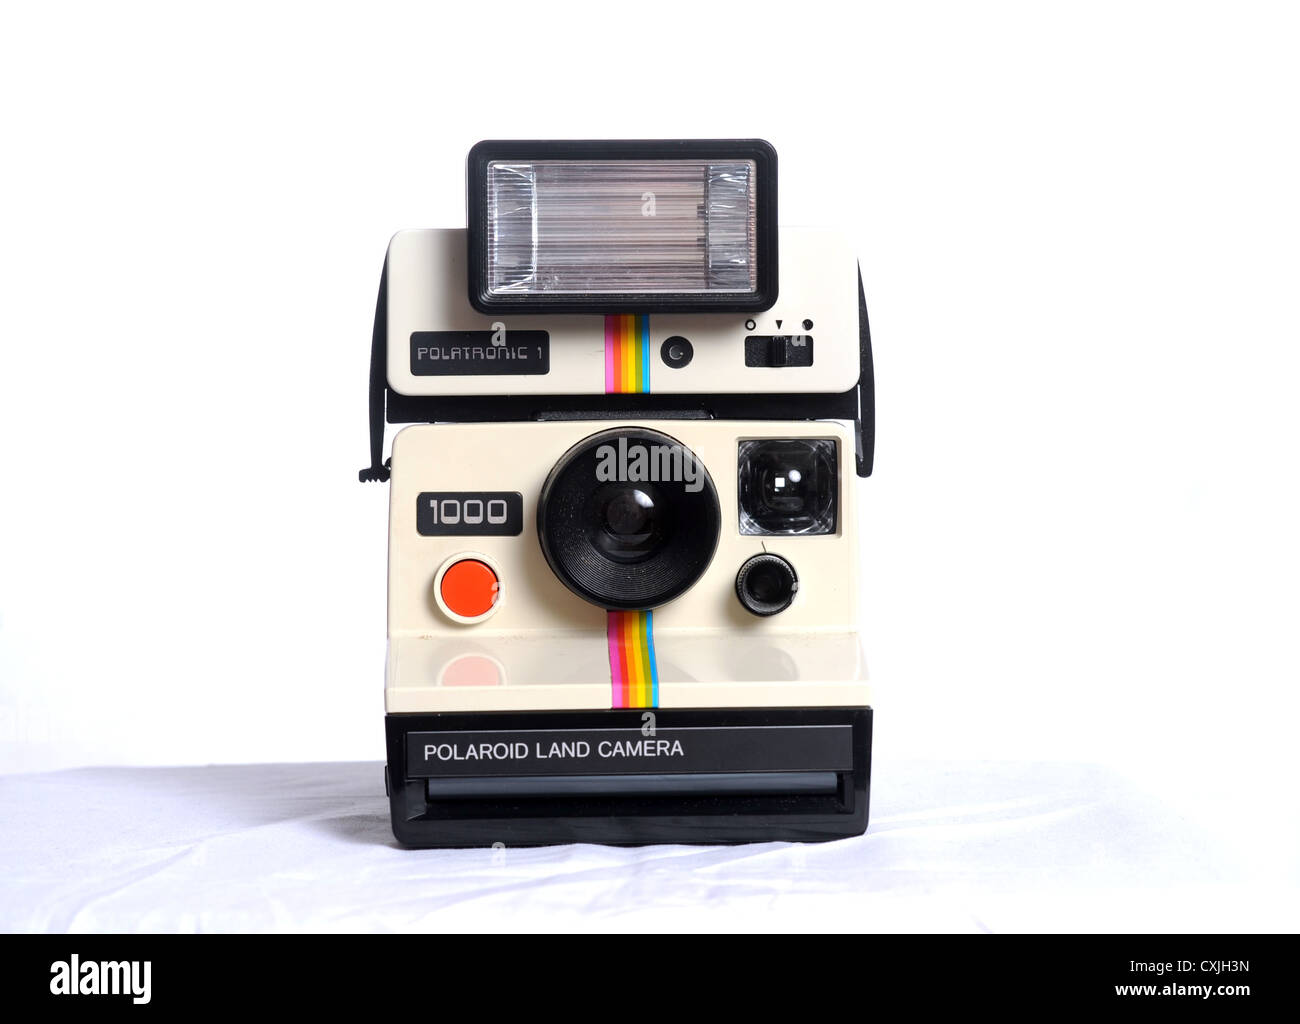 Alte Polaroid Land Kamera 1000 UK Stockfotografie - Alamy